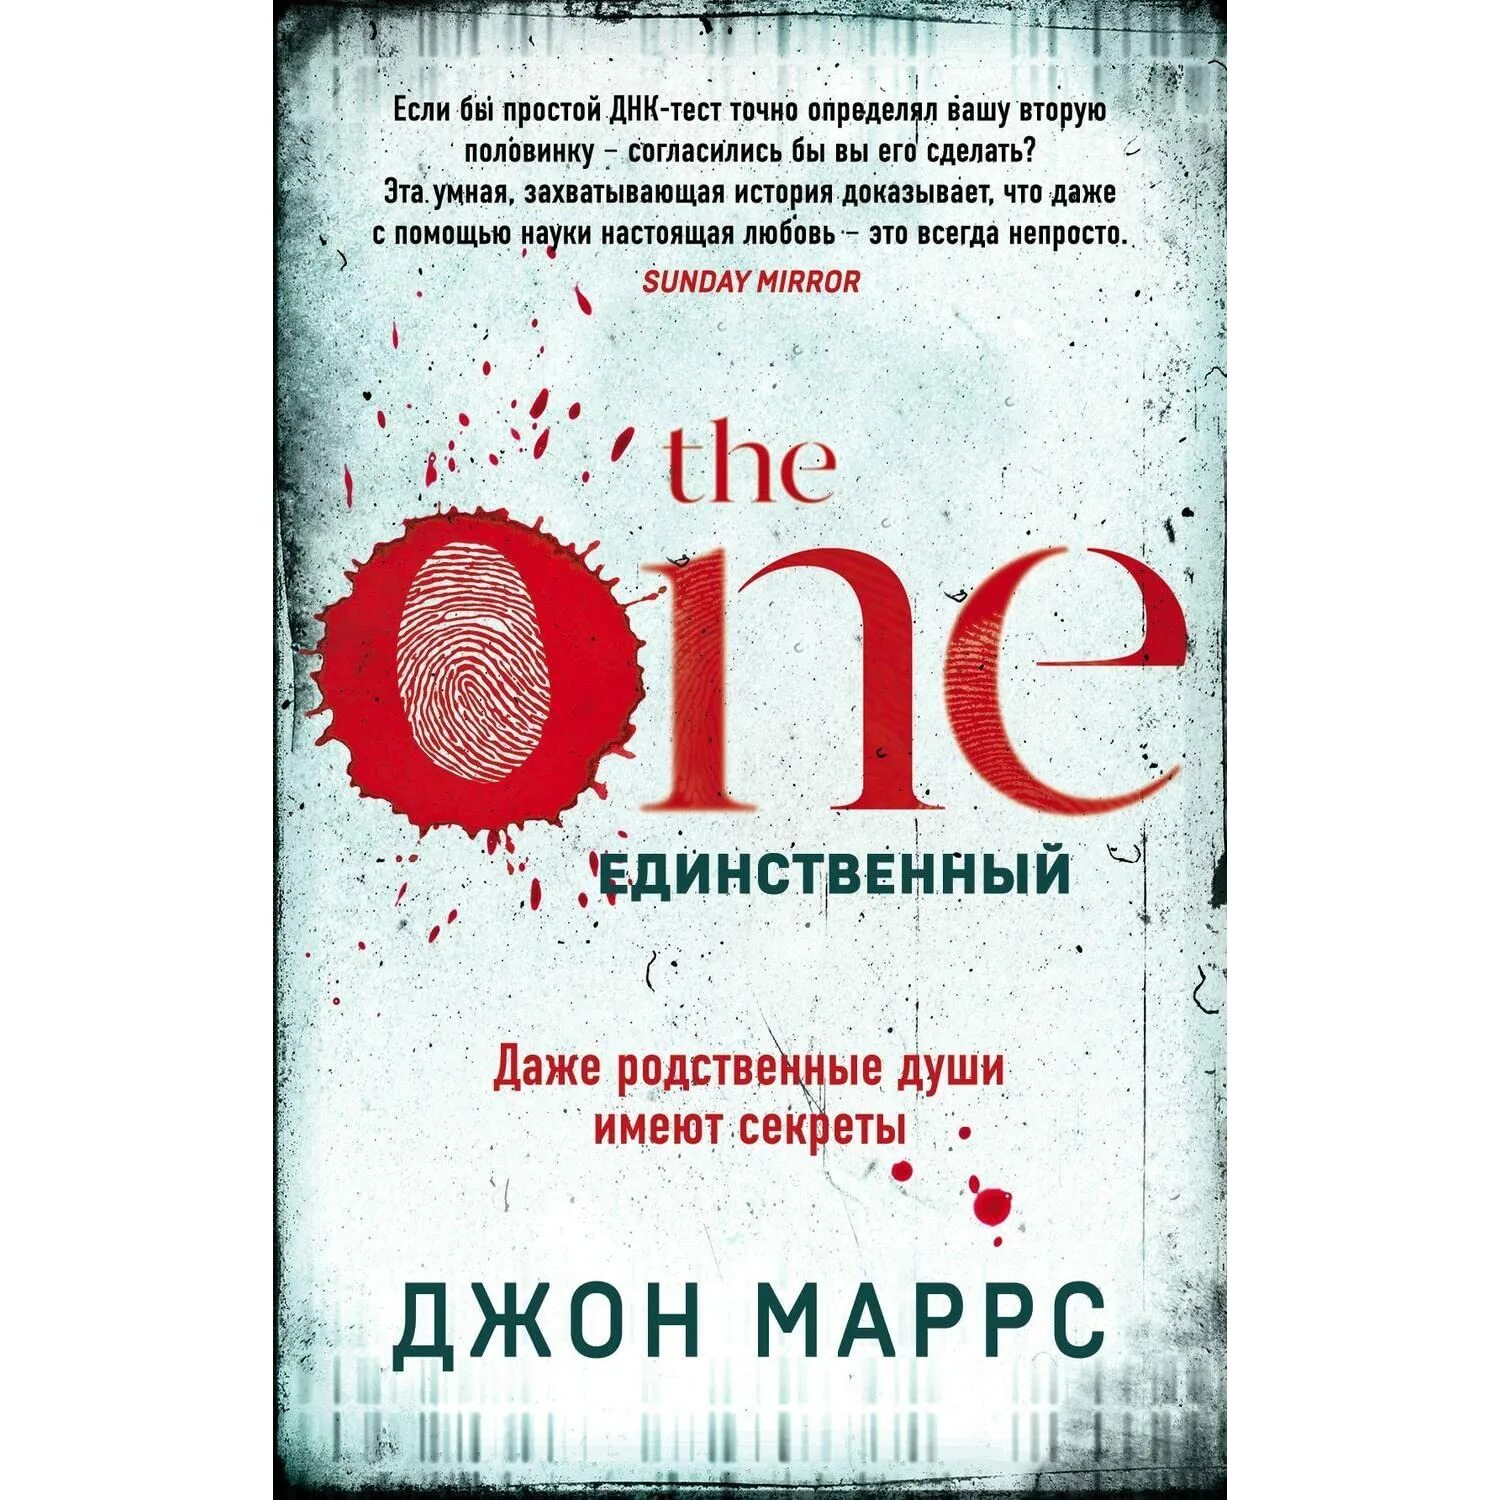 V “the one. Единственный” Джон Маррс. Единственный книга. The one книга. Единственный книга Джон. Книга first